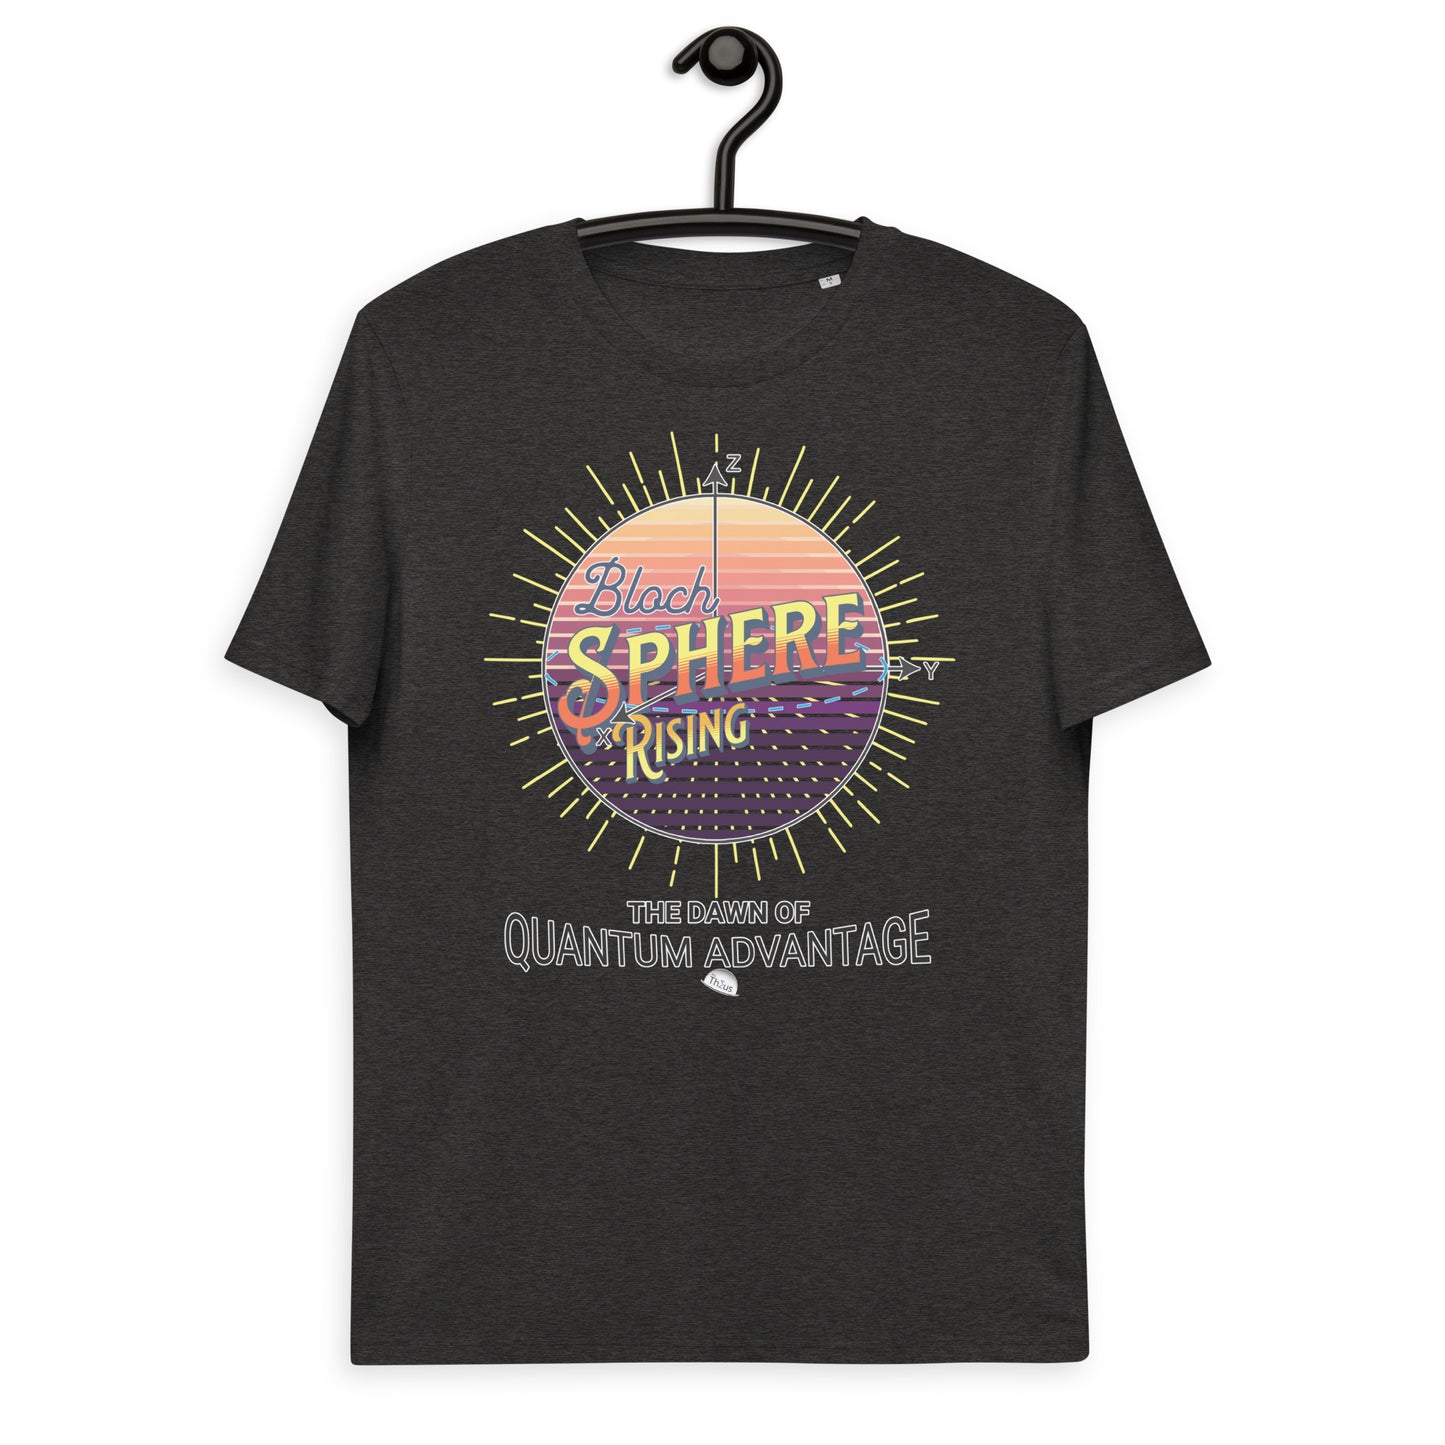 Unisex organic cotton t-shirt - Dawn of Quantum Advantage As The Bloch Sphere Rises